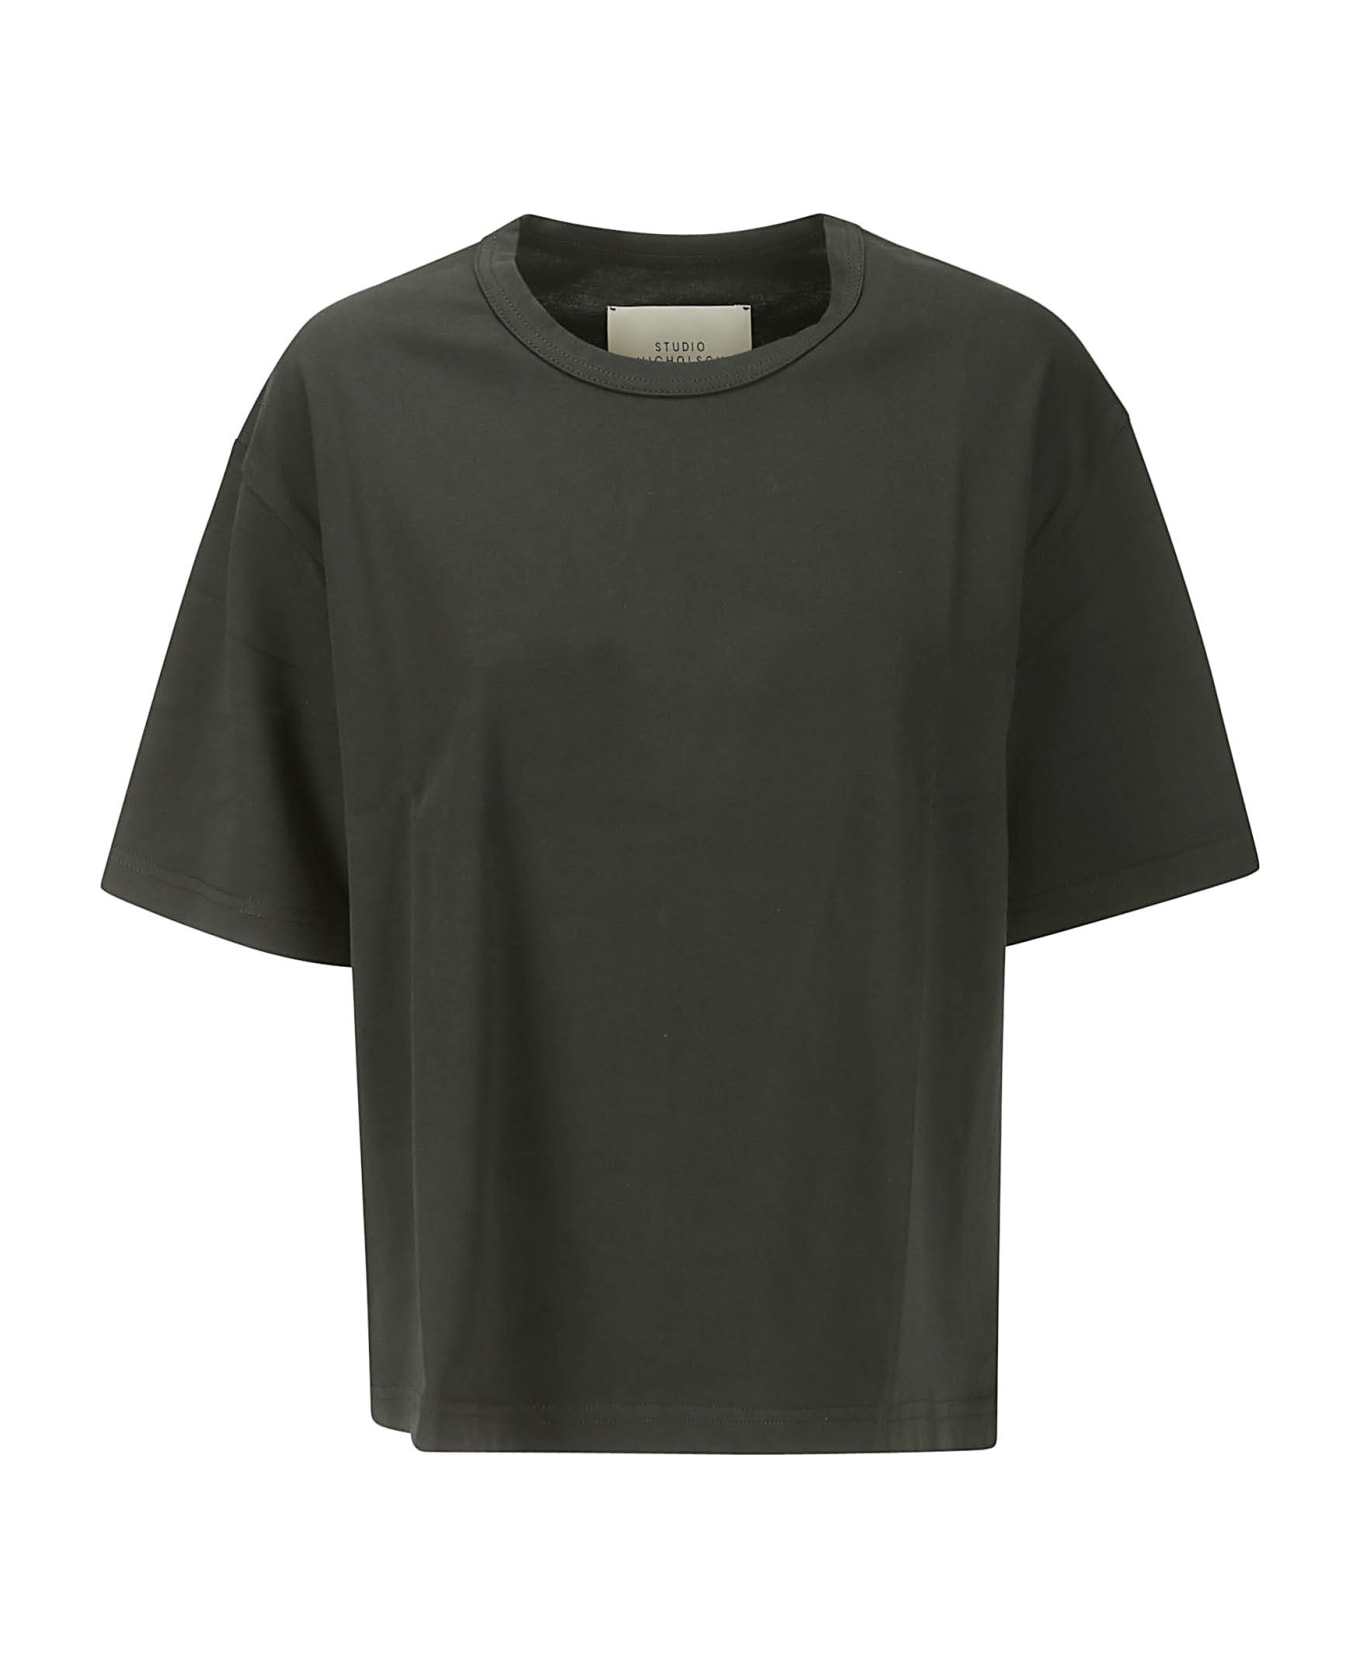 Studio Nicholson Continuity - Jersey - Womens Short Sleeve T-shirt - BLACK